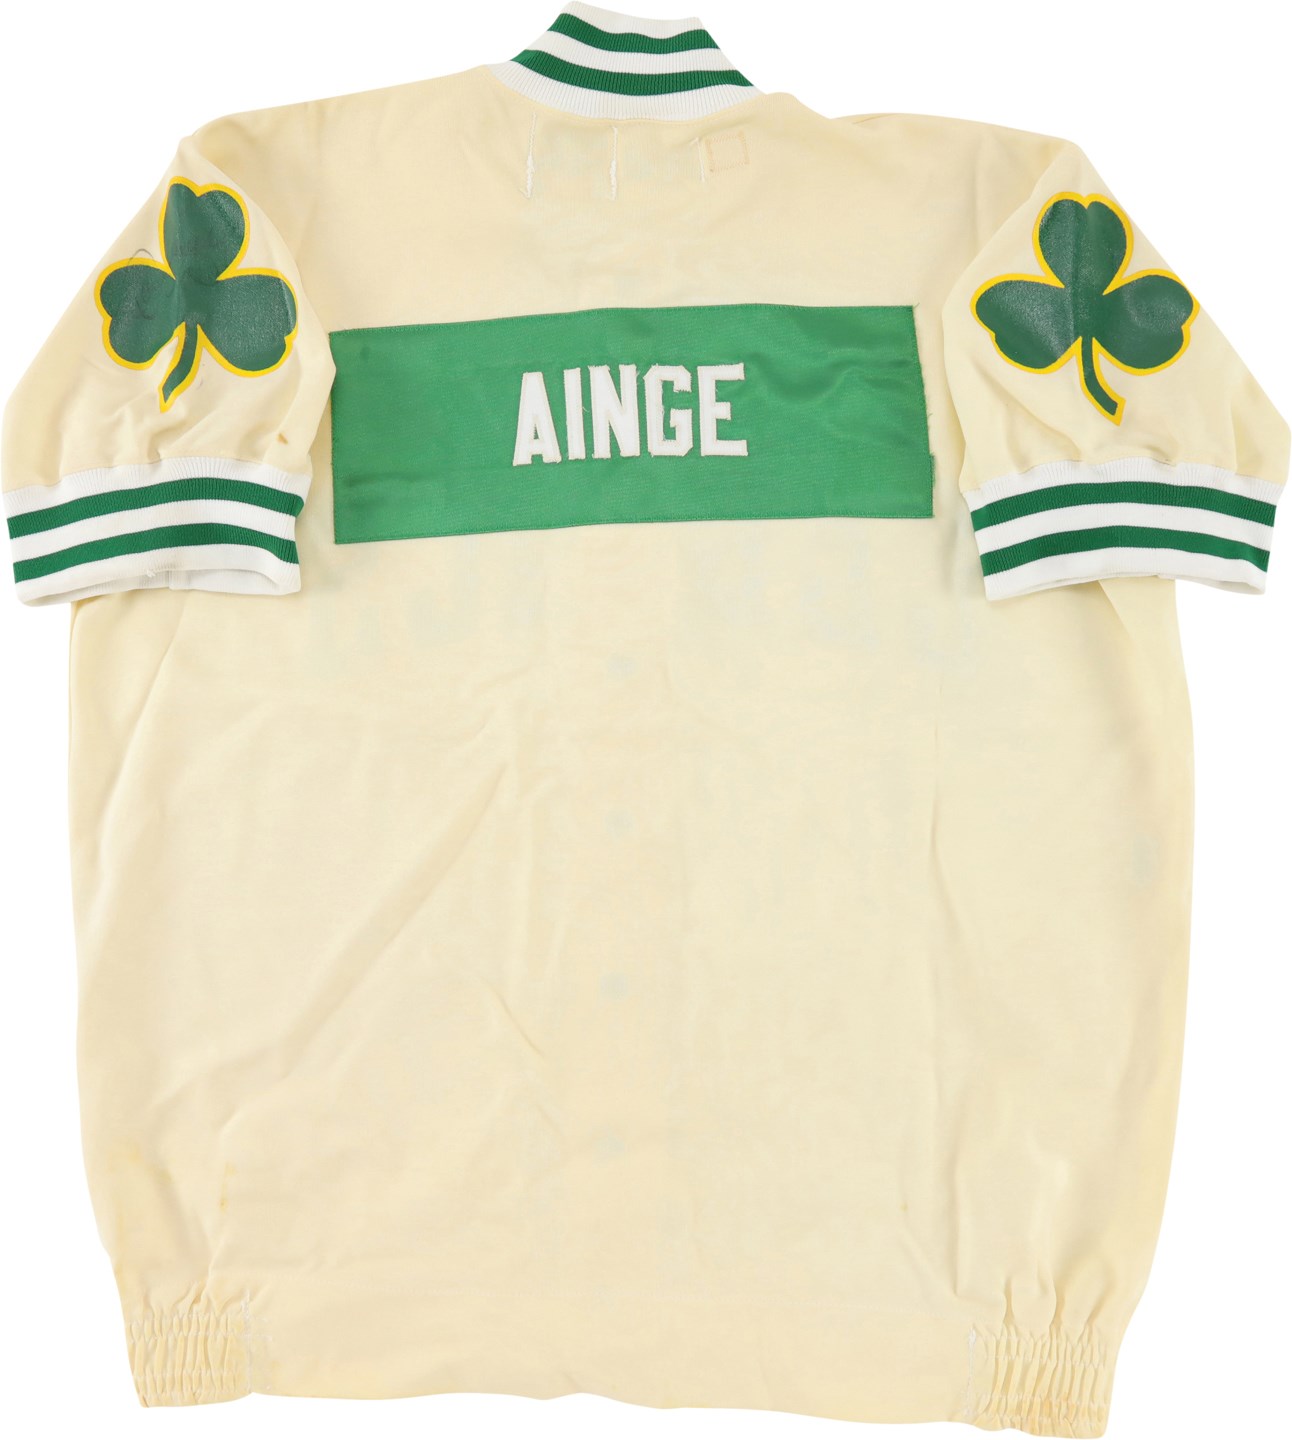 Basketball - 1988-89 Danny Ainge Game Worn Boston Celtics Warmup Jacket